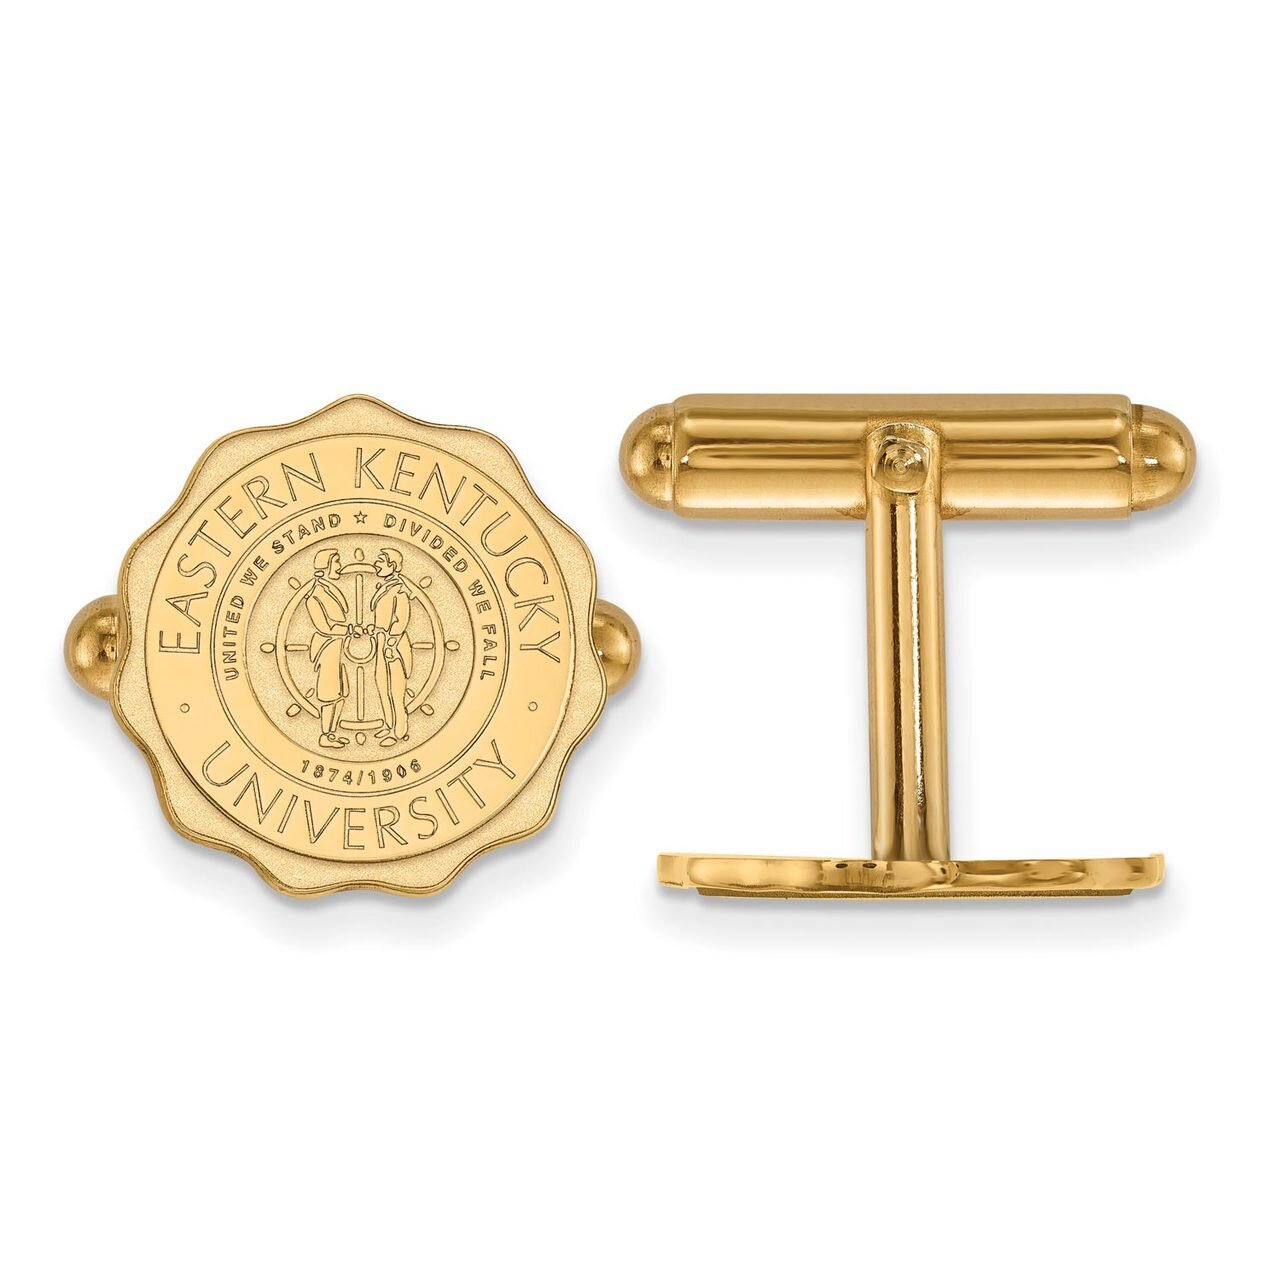 Eastern Kentucky University Crest Cufflinks Gold-plated Silver GP018EKU